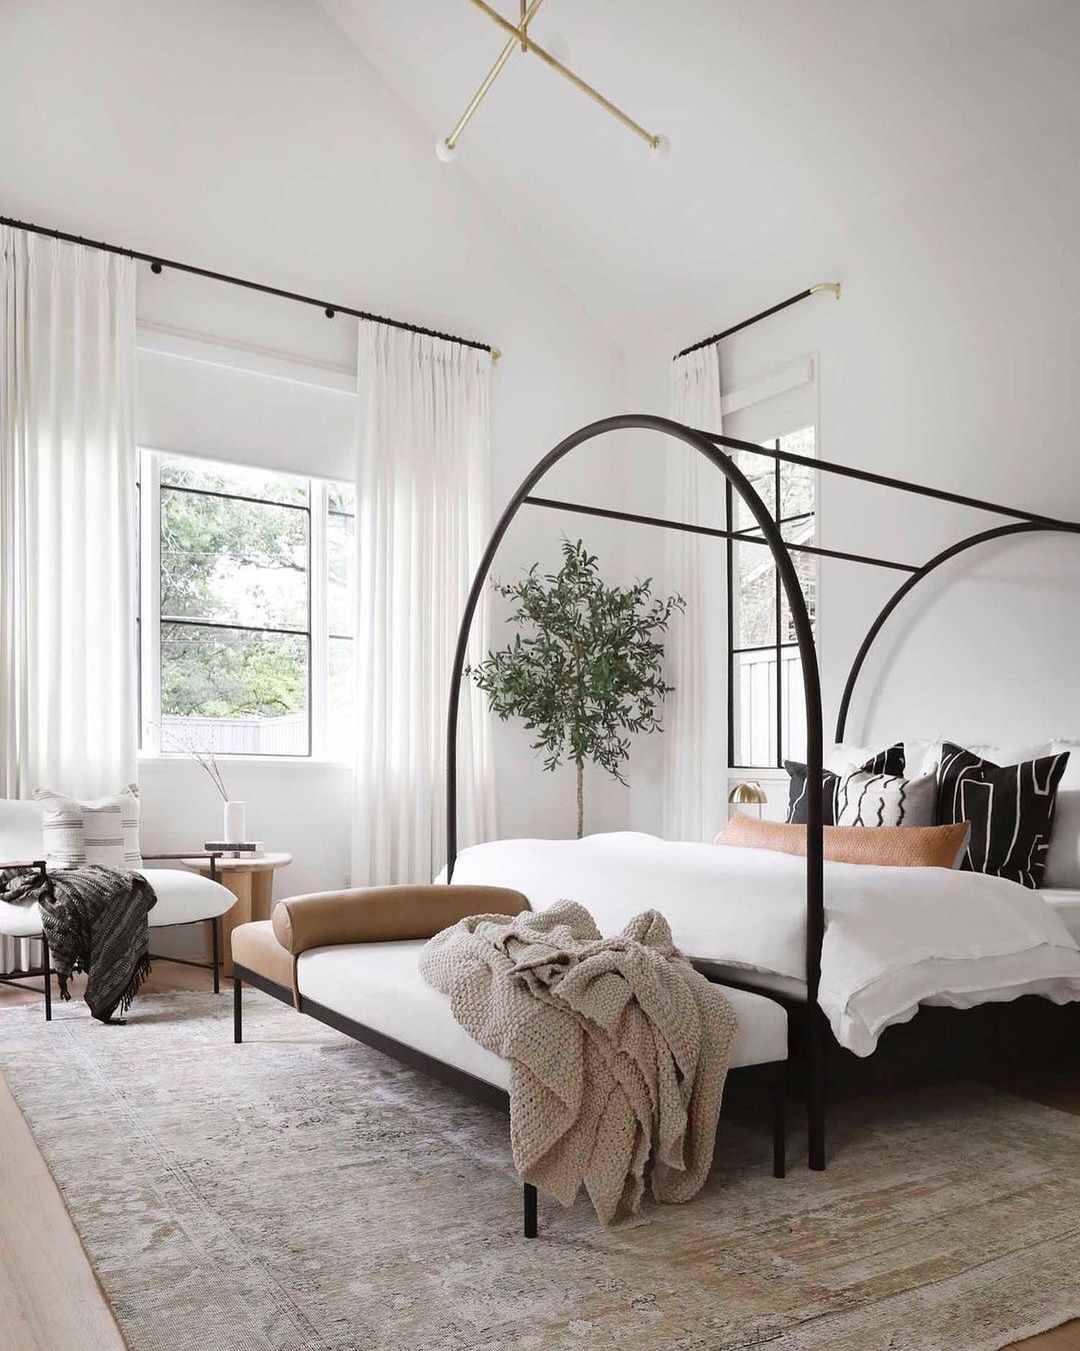 Modern Bedroom with Sleek Lines. Photo by Instagram user @ellenfleckinteriors